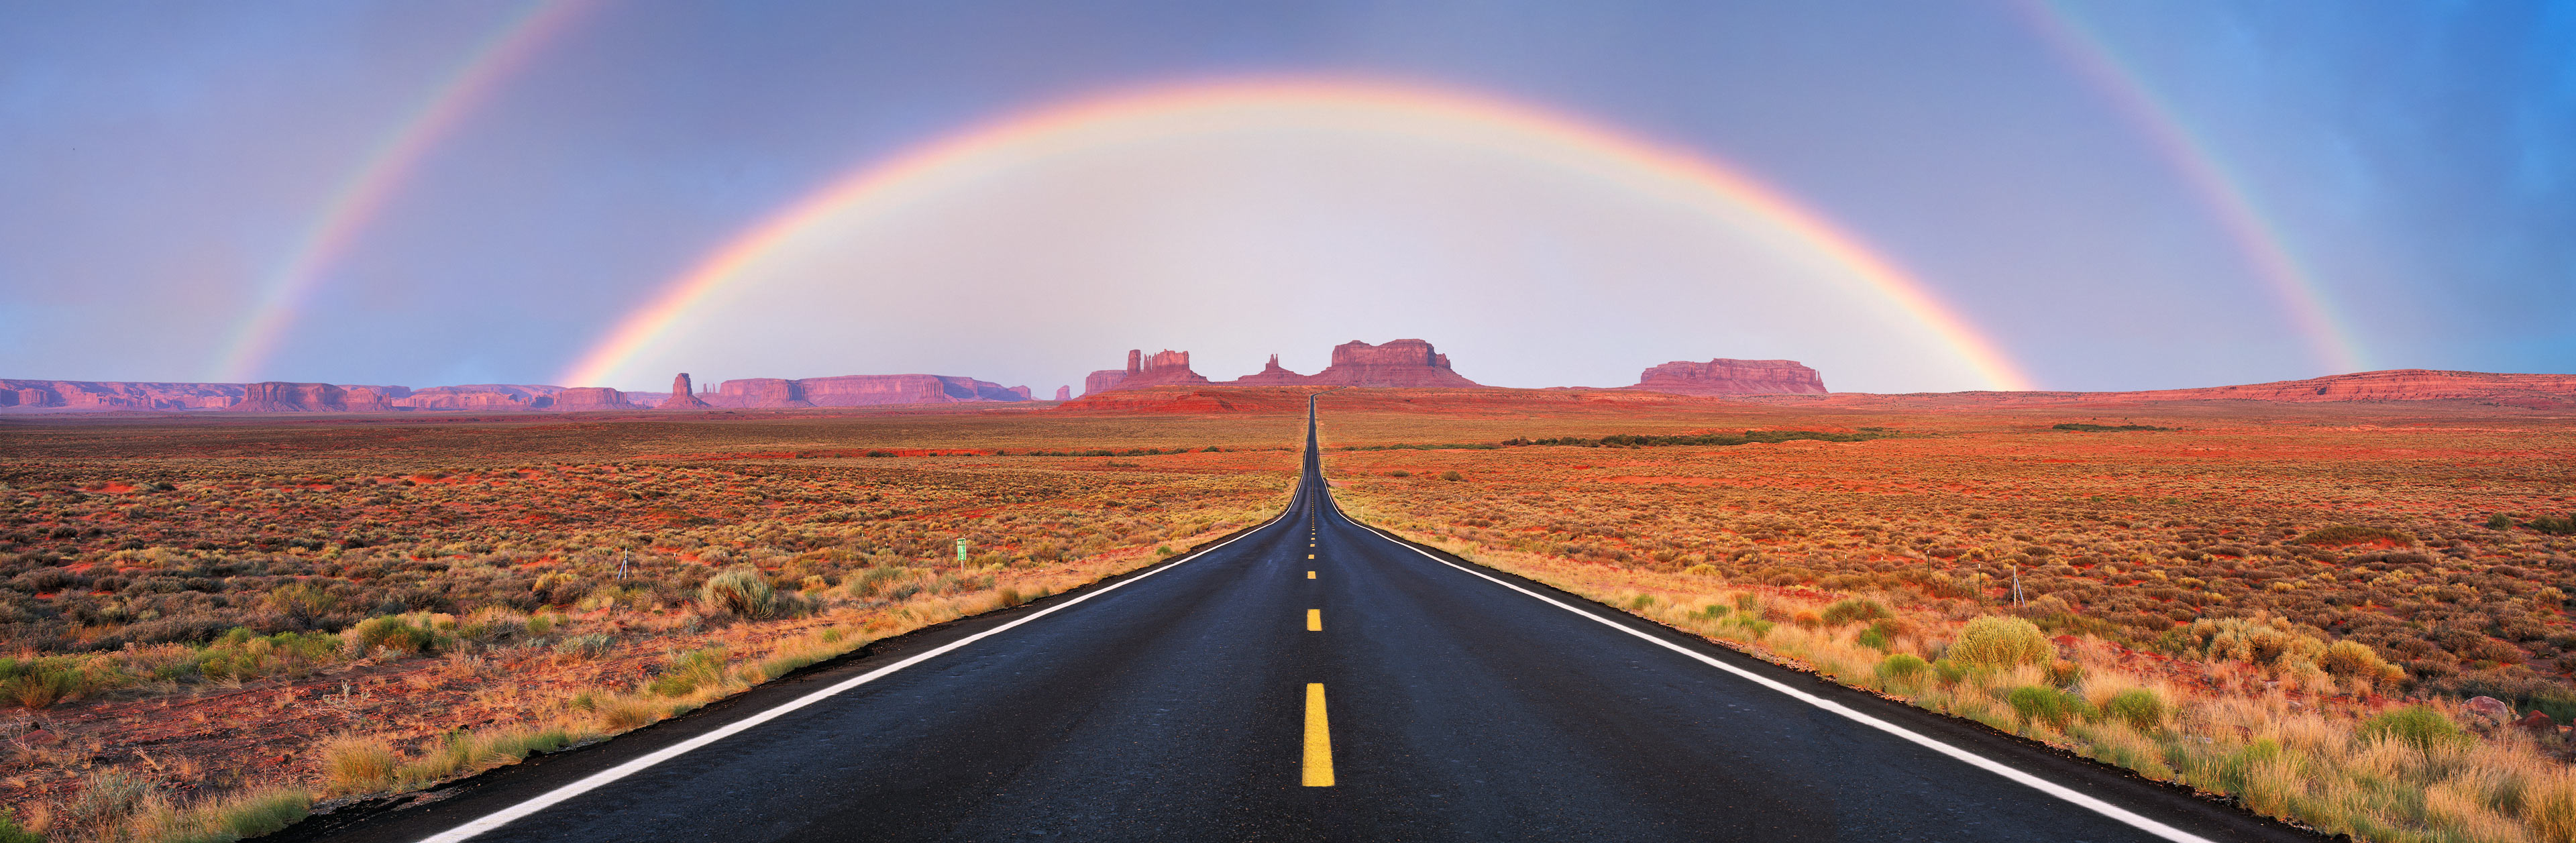 Road, Monument Valley, Navajo Tribal Park, Utah, USA (image 47768CComp7)